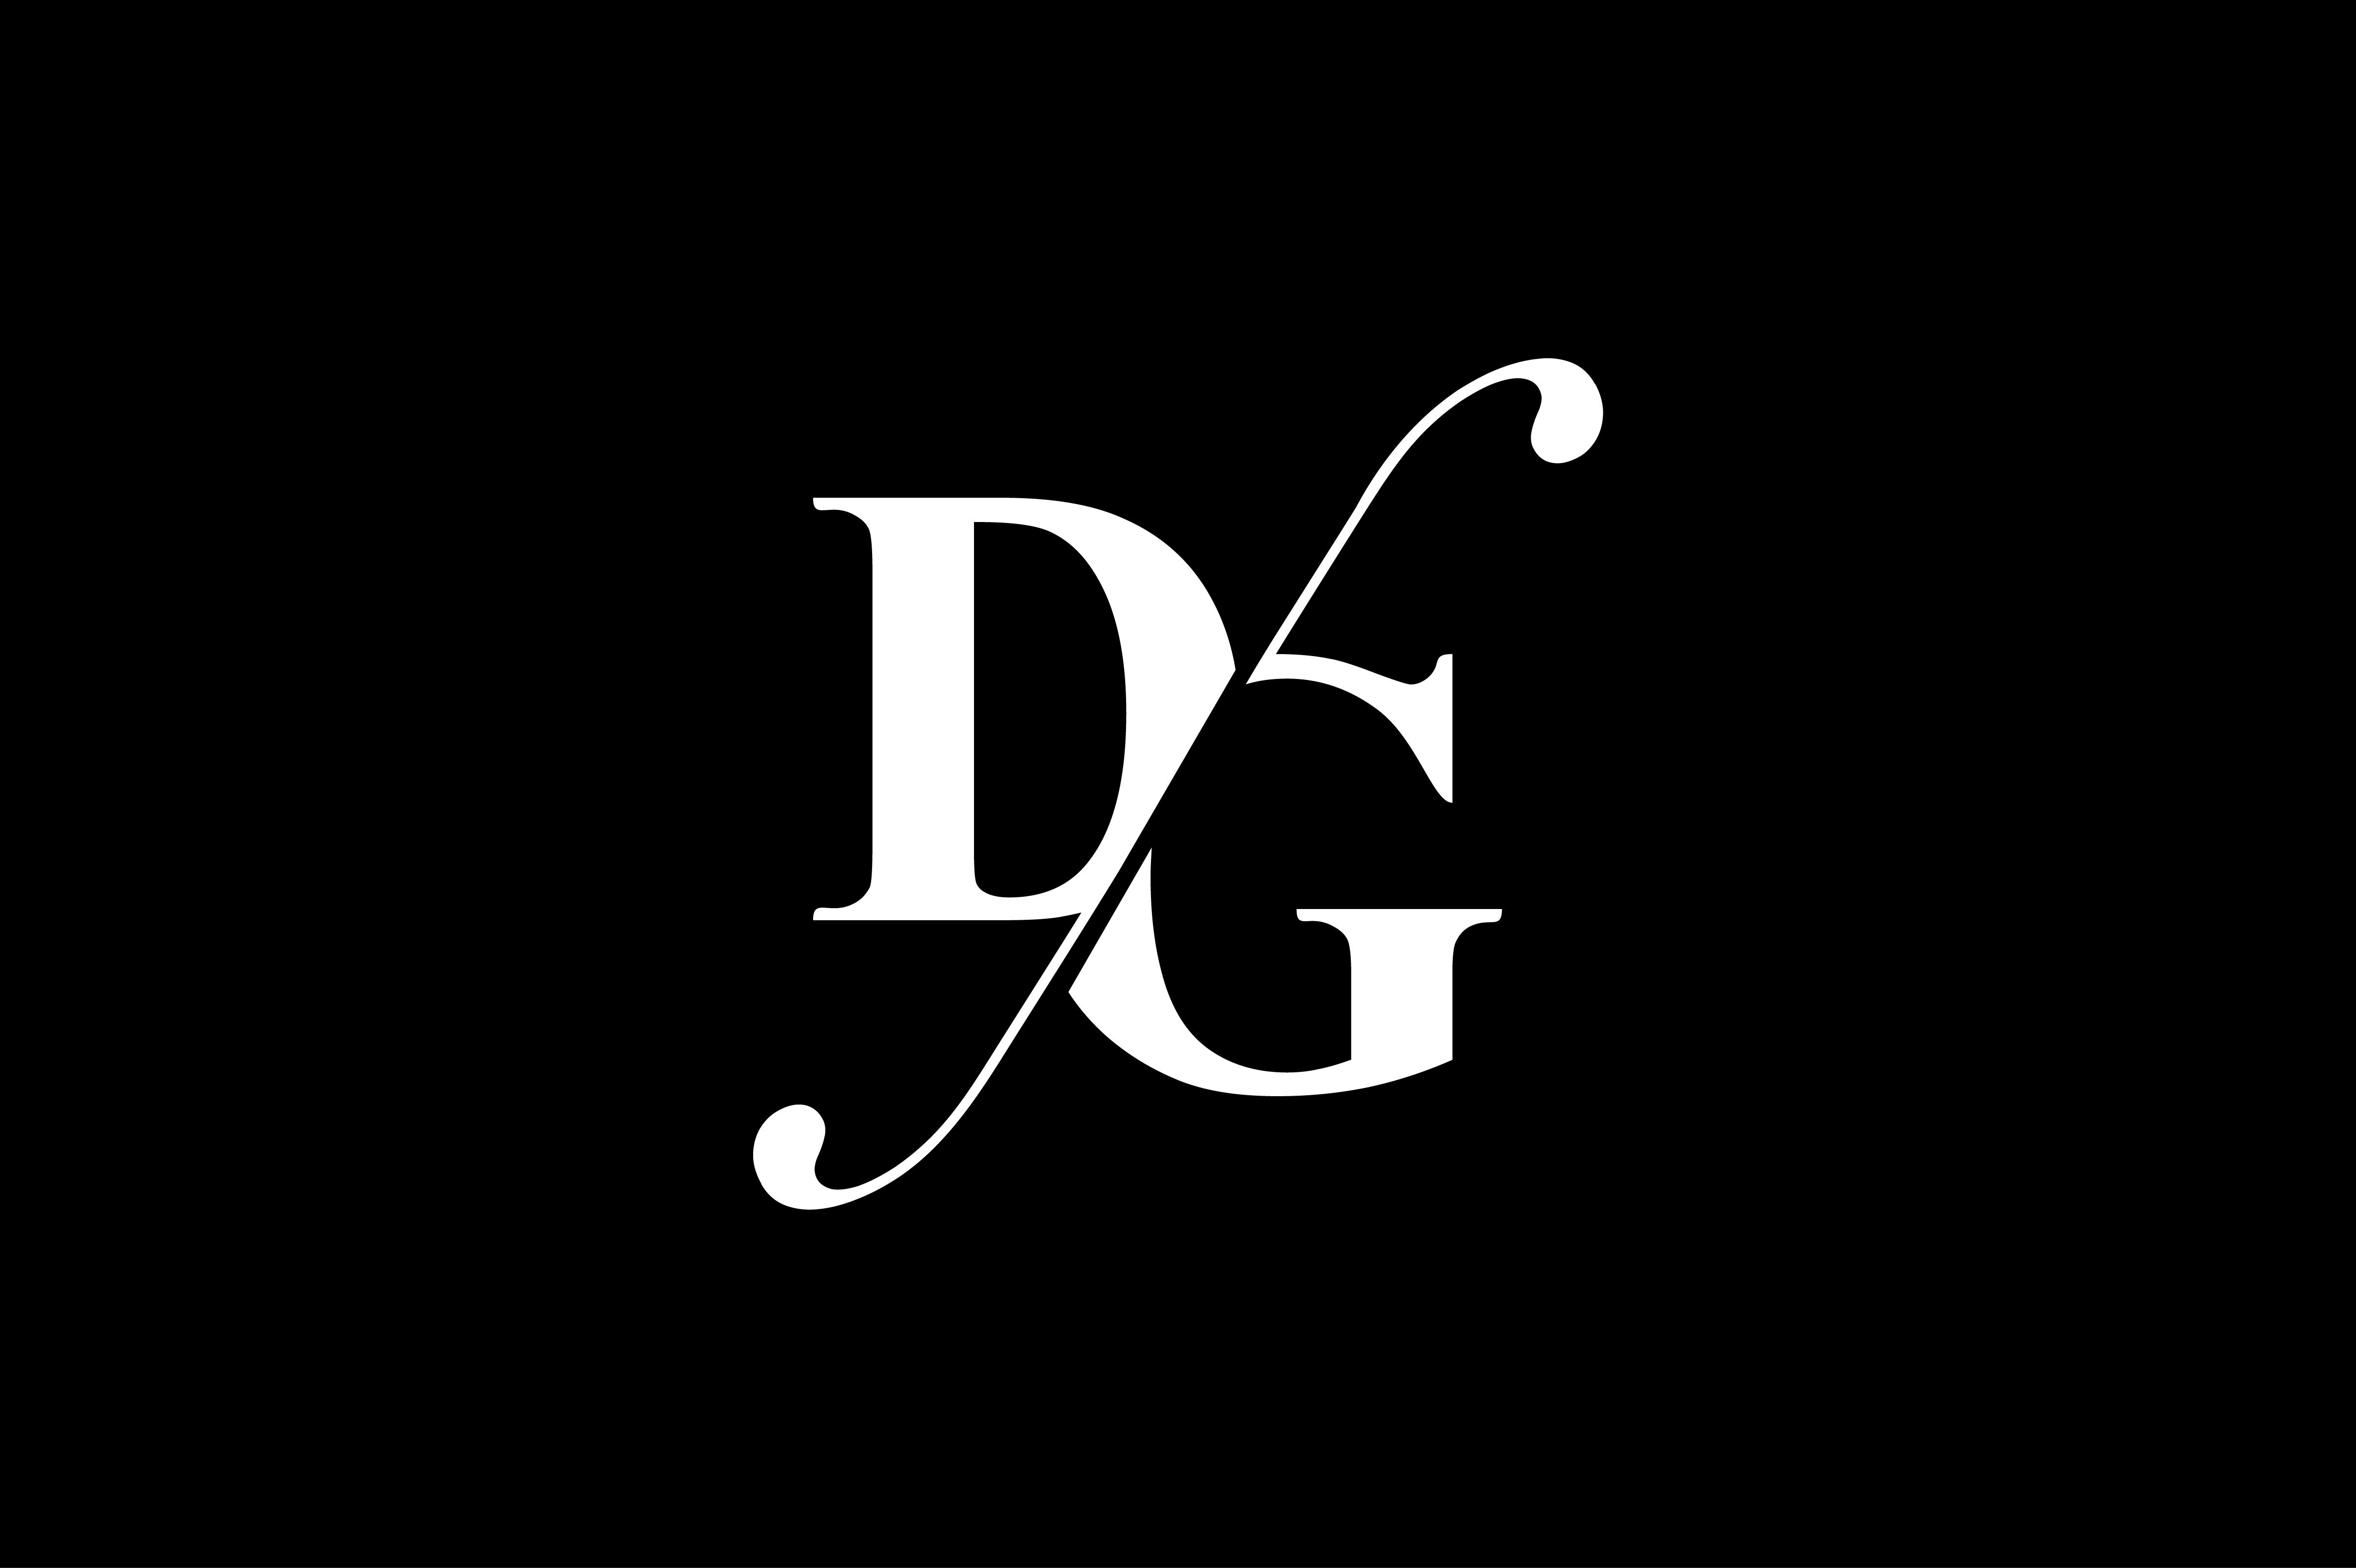 DG Monogram Logo Design By Vectorseller | TheHungryJPEG.com